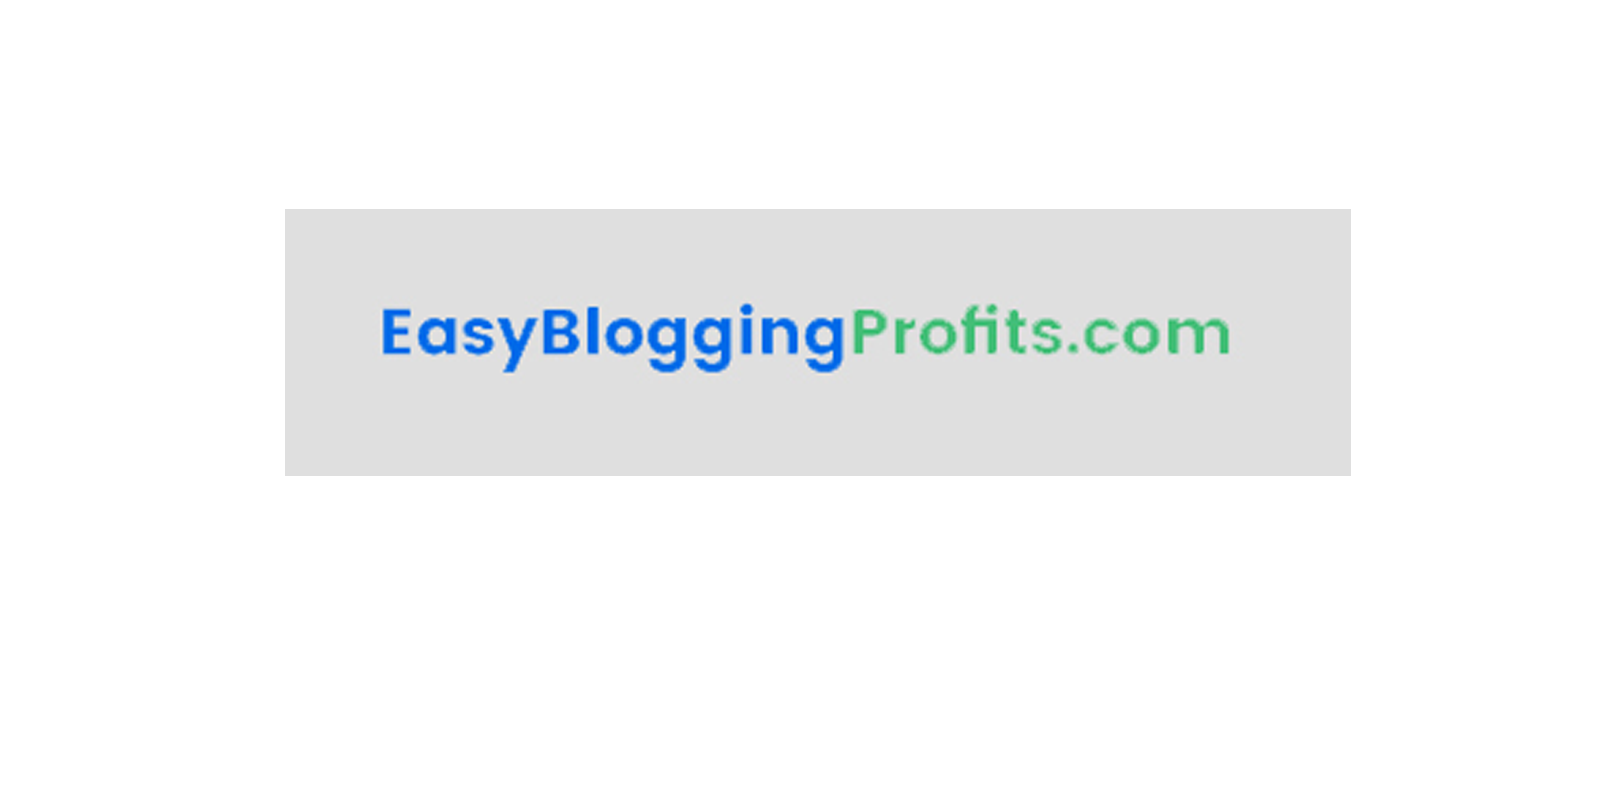 Easy blogging profits review